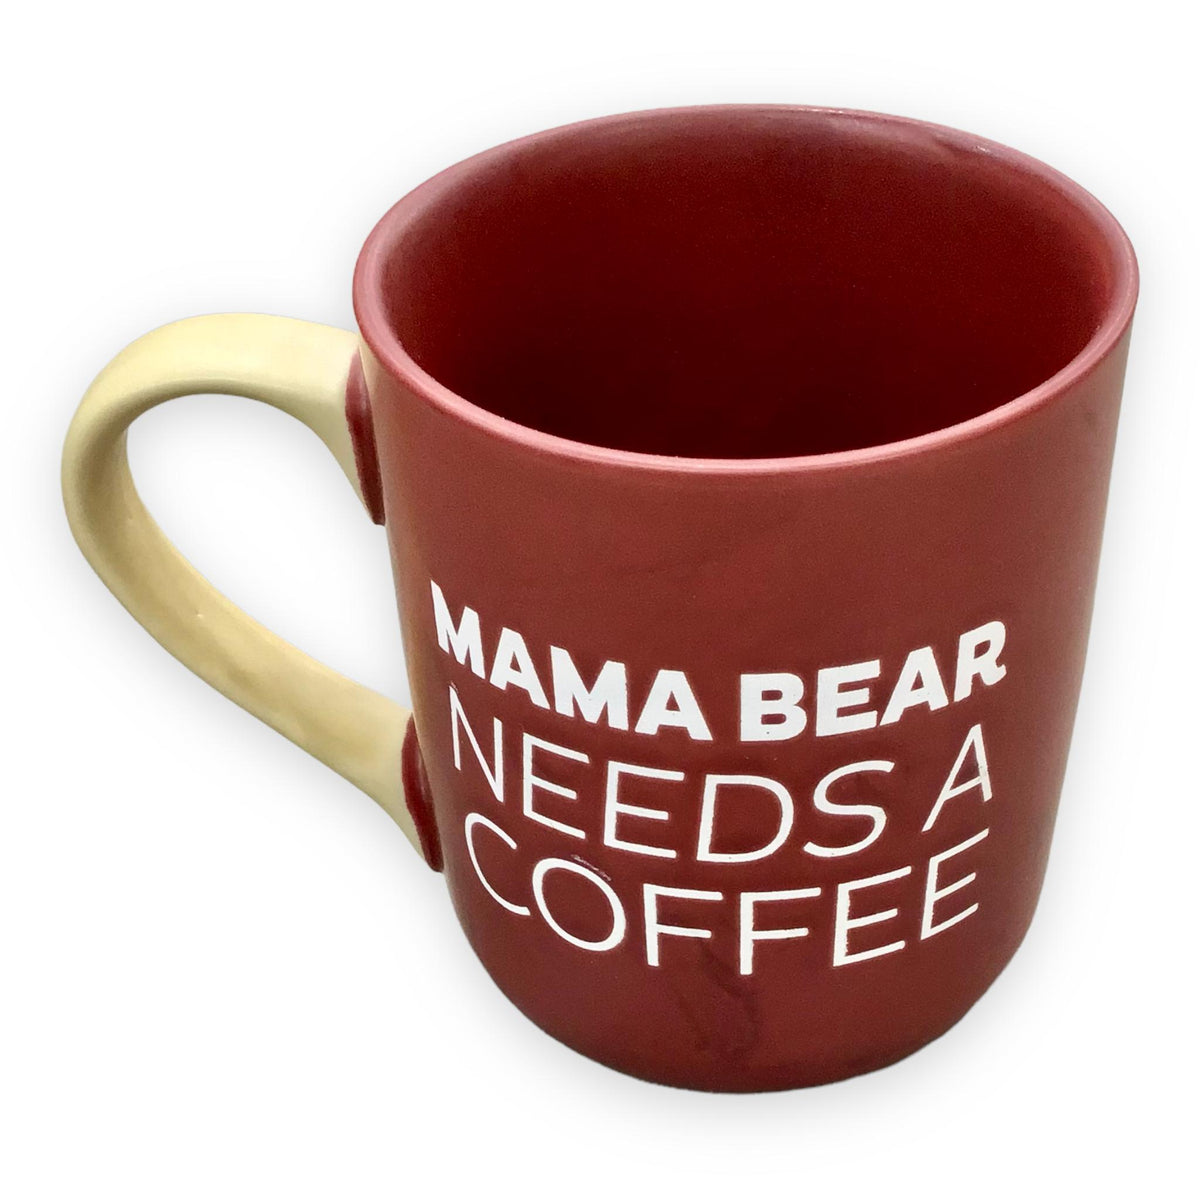 Mama Bear Coffee Mug, 18oz - Ceramic Coffee Mug with Nobody Messes with My  Cubs Quote - This Mug for…See more Mama Bear Coffee Mug, 18oz - Ceramic